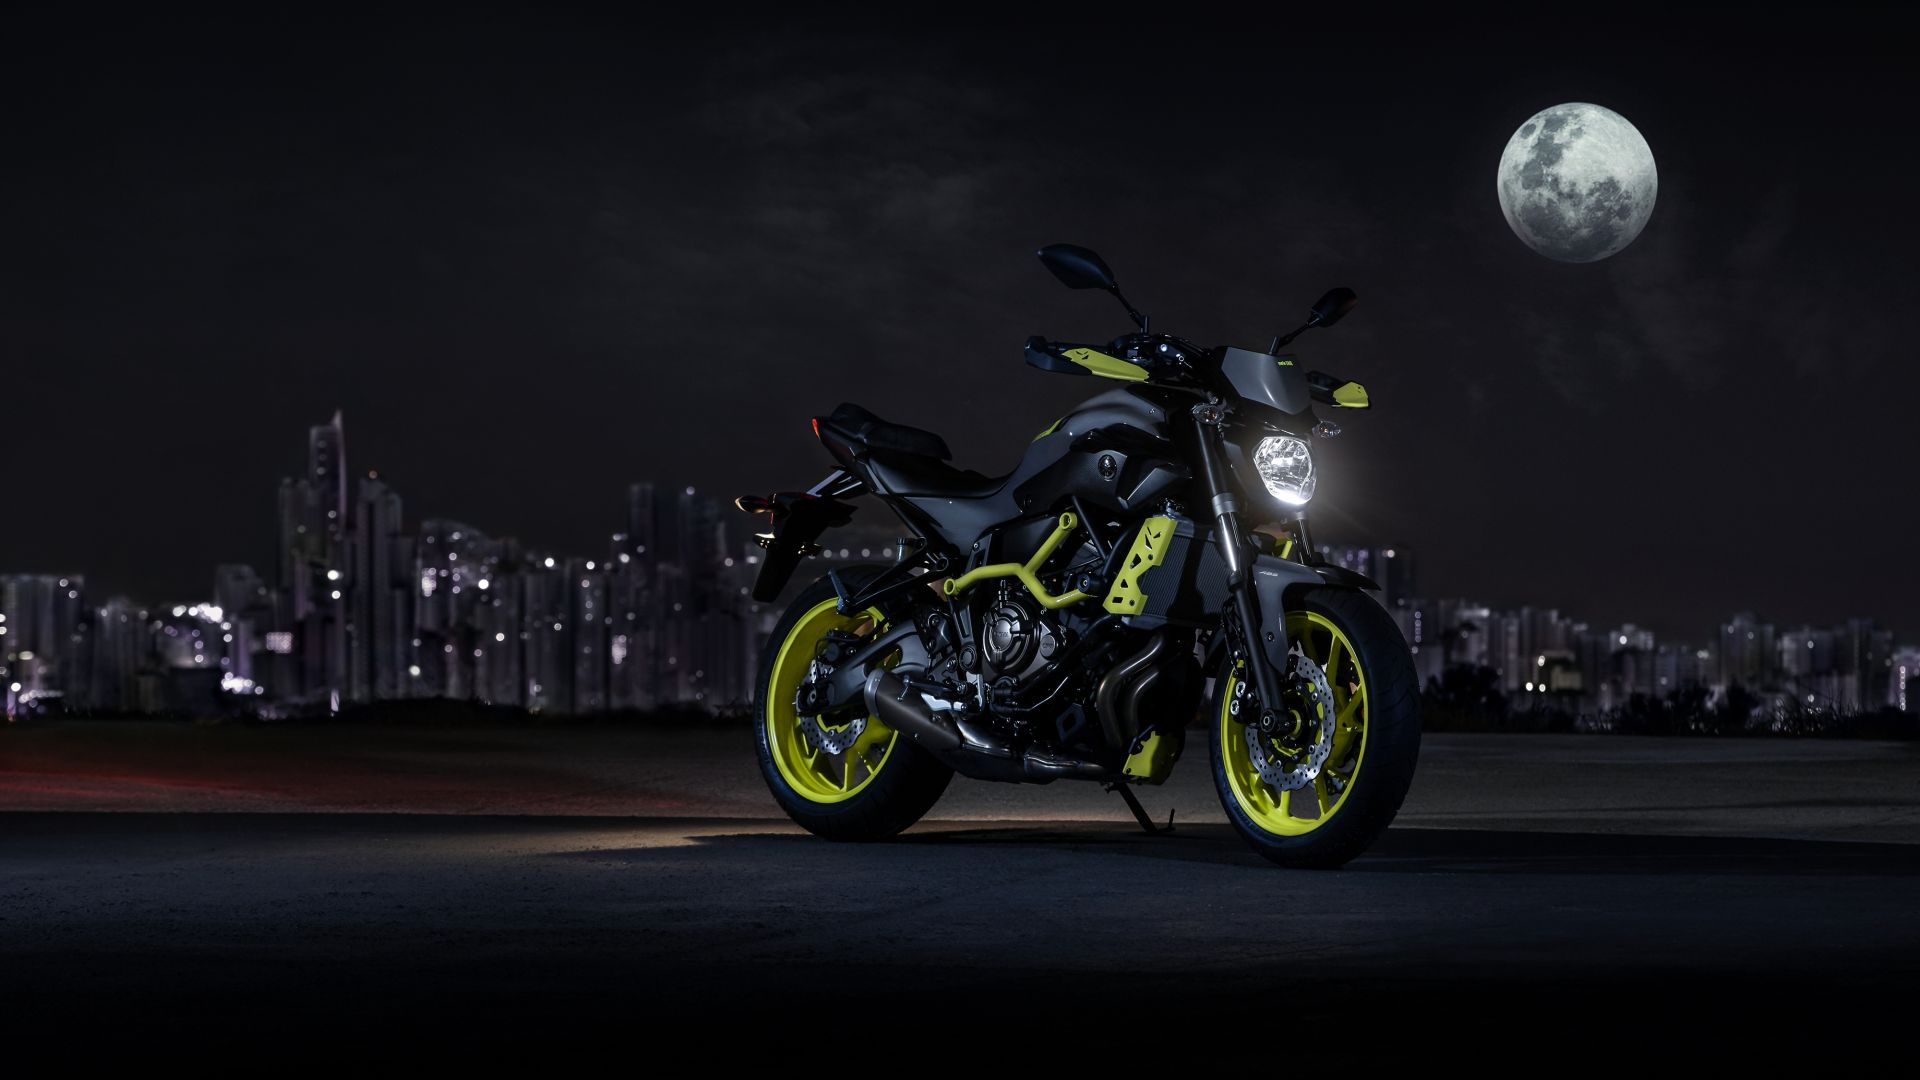 Wallpaper Yamaha MT-07 motorcycle, night, moon